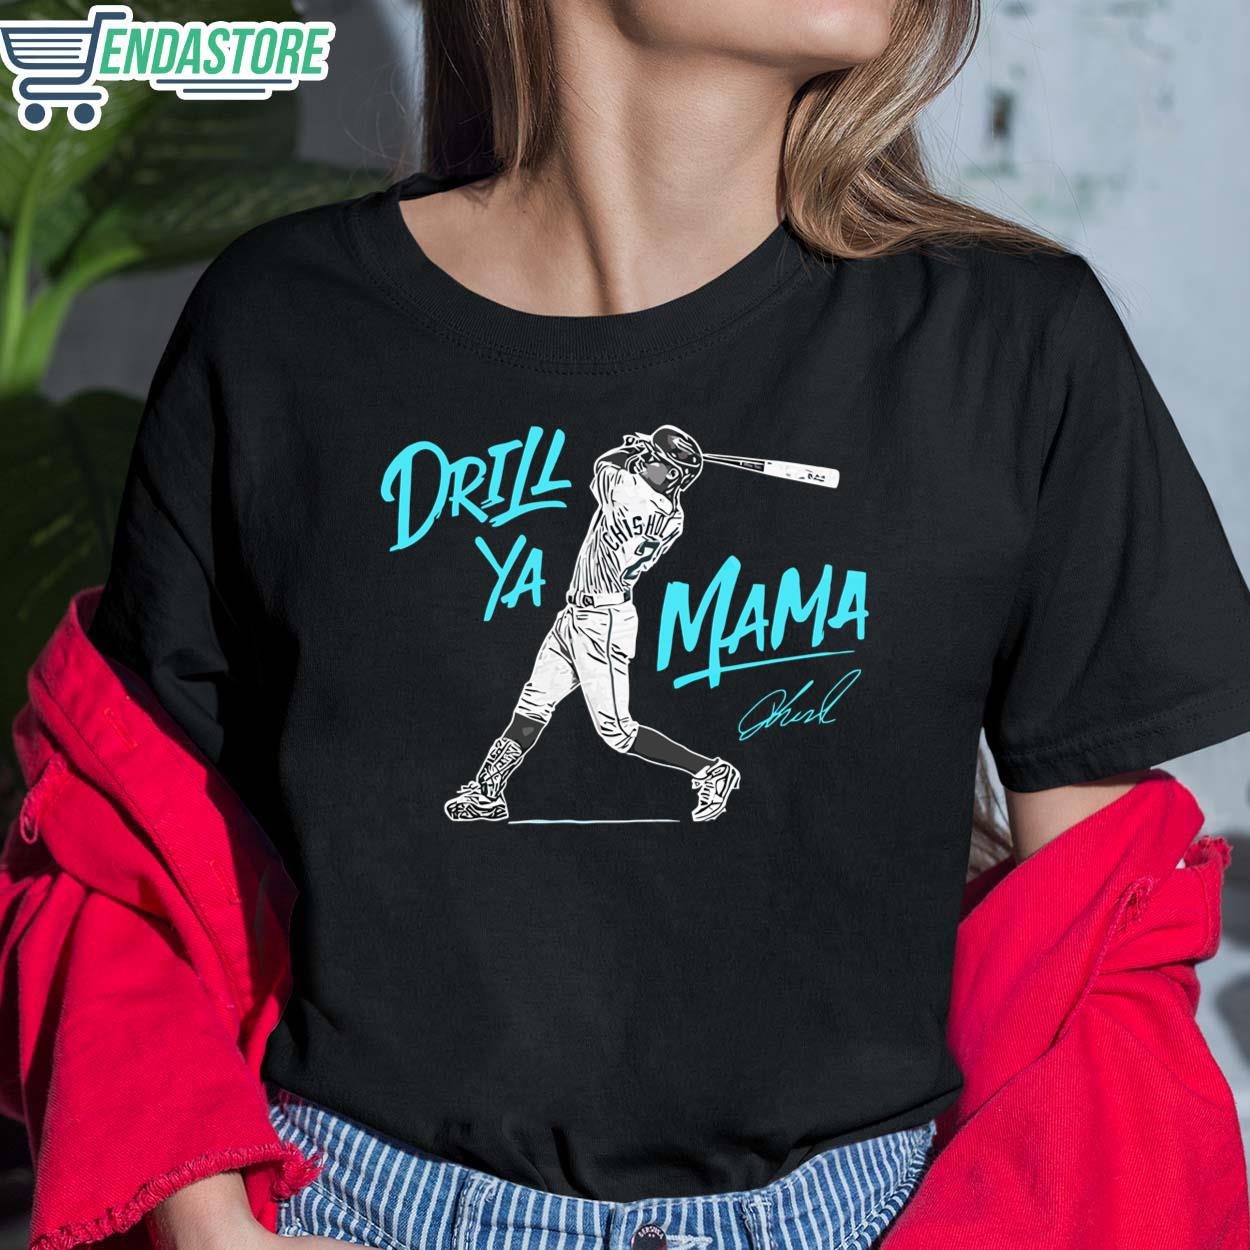 Endastore Jazz Chisholm Drill Ya Mama Signature Sweatshirt